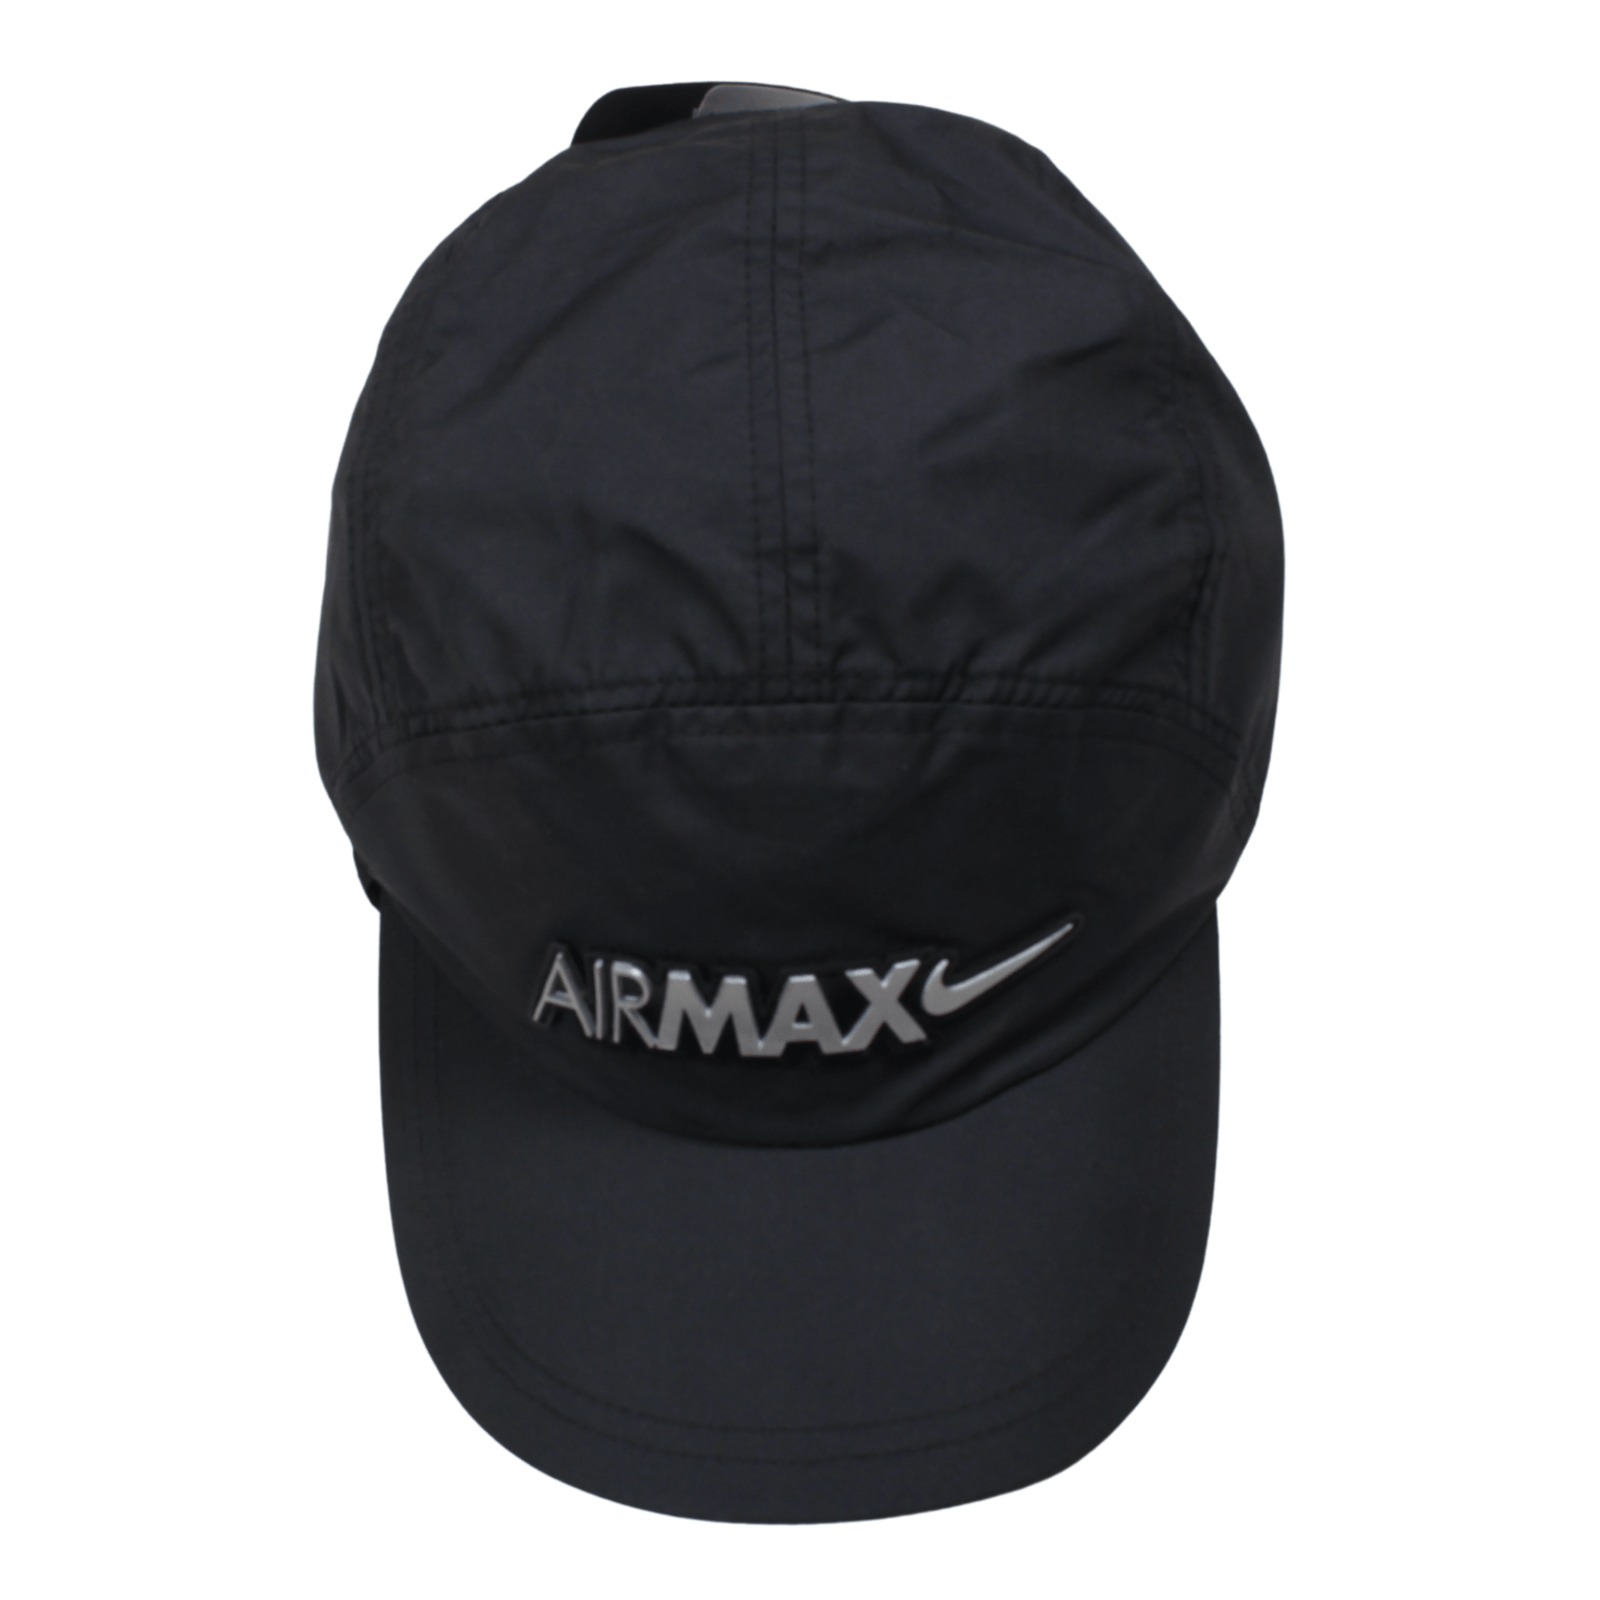 Vintage Nike Airmax Trapper Cap BNWT